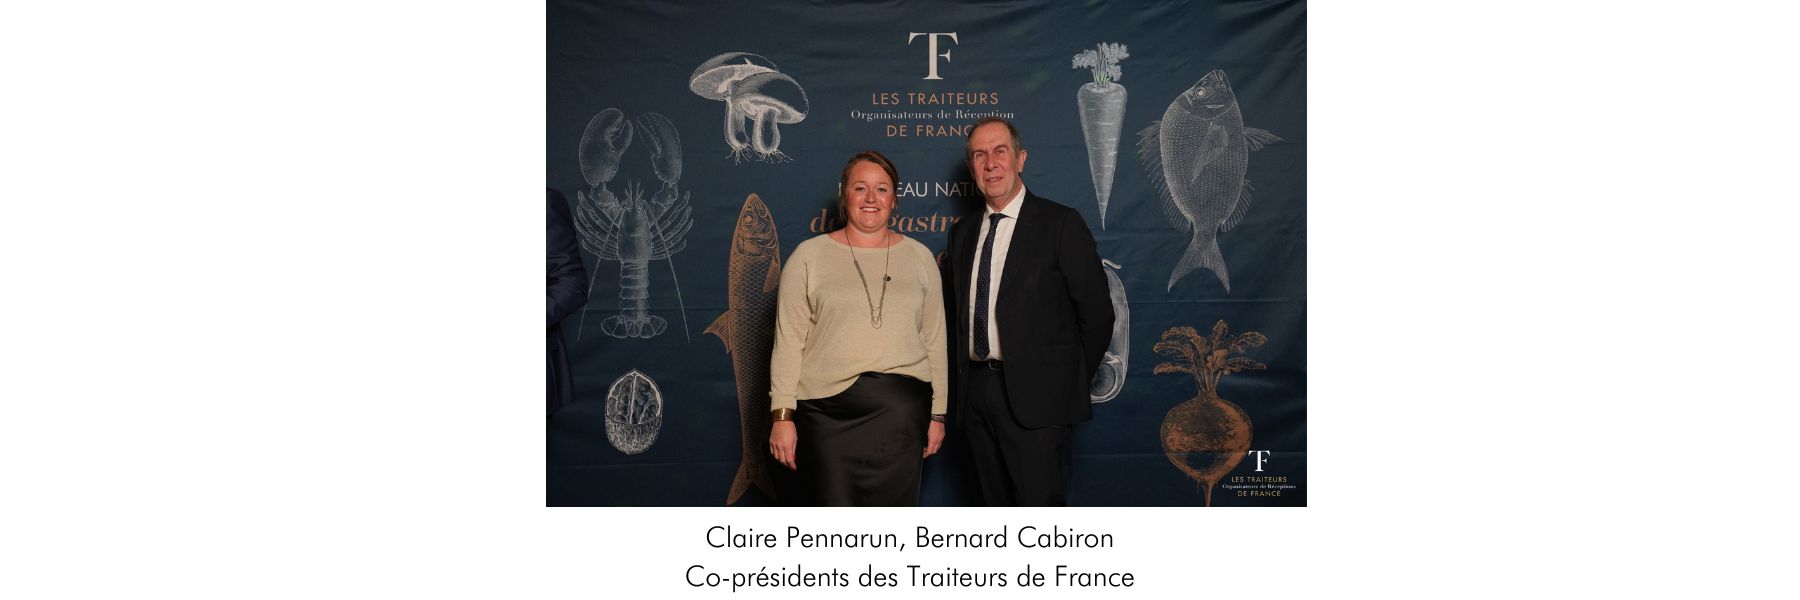 Traiteurs de France Claire Pennarun Bernard Cabiron